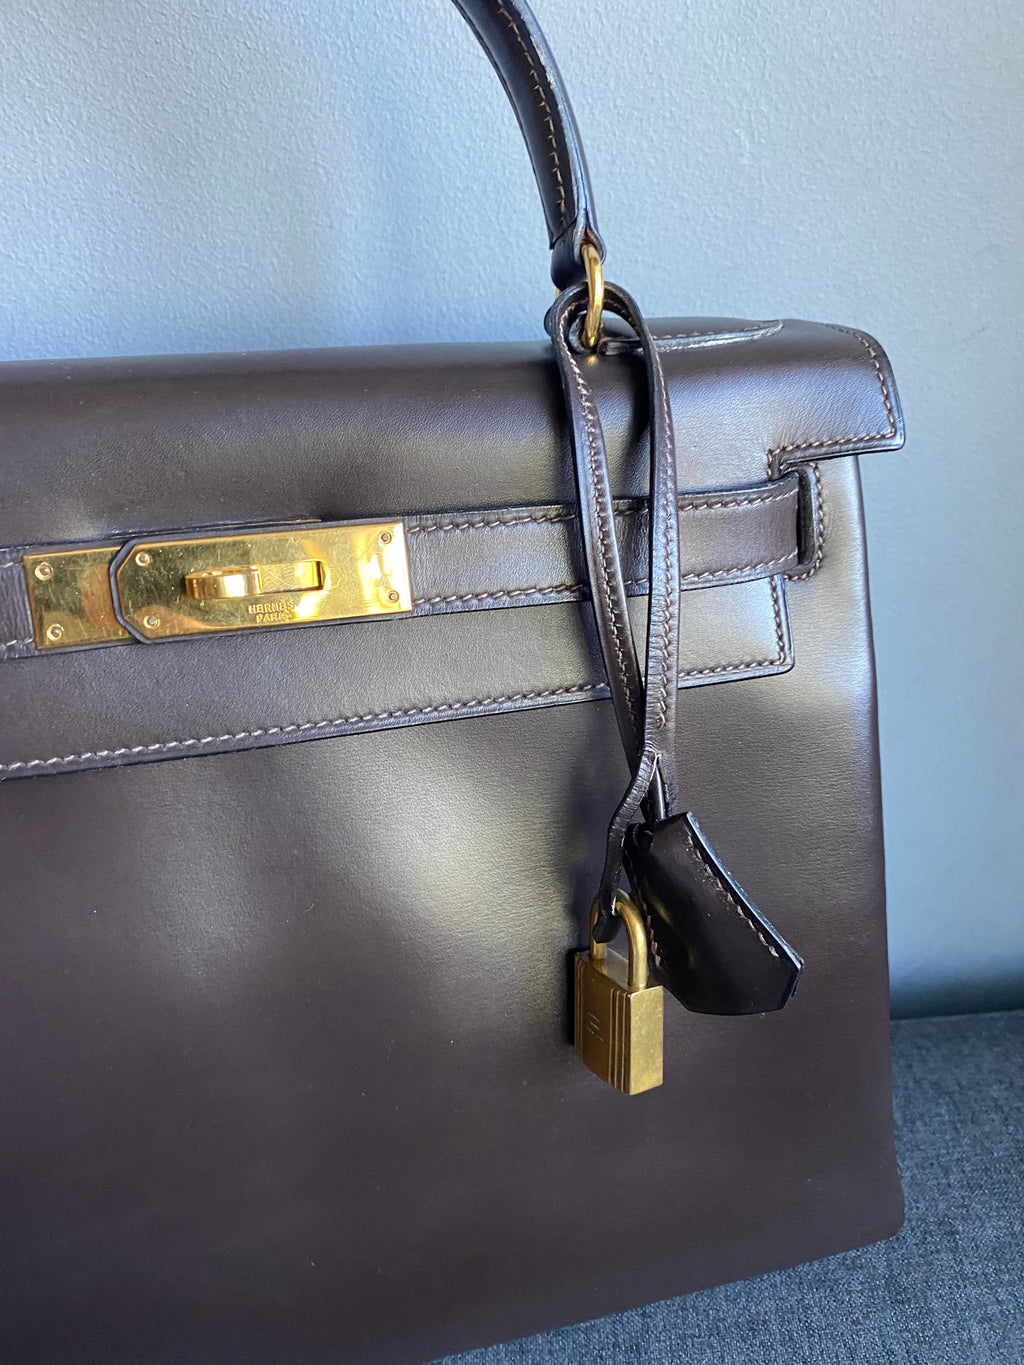 HERMES Kelly 28 handbag in red box leather - VALOIS VINTAGE PARIS